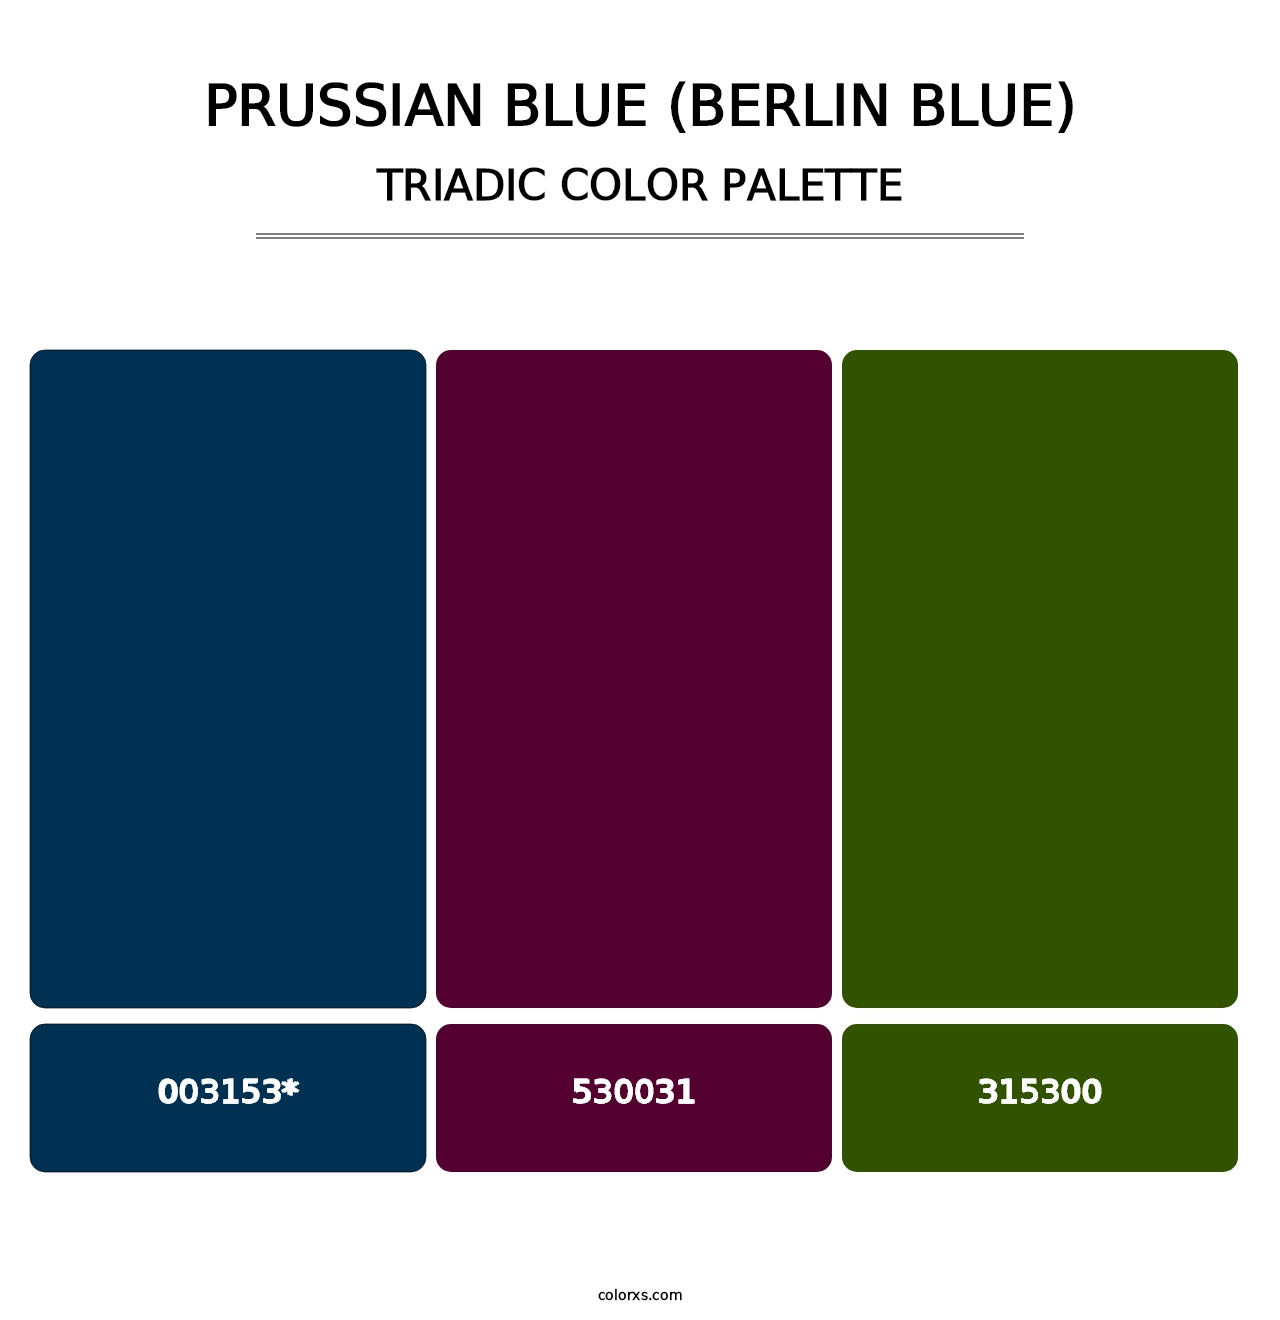 Prussian Blue (Berlin Blue) - Triadic Color Palette